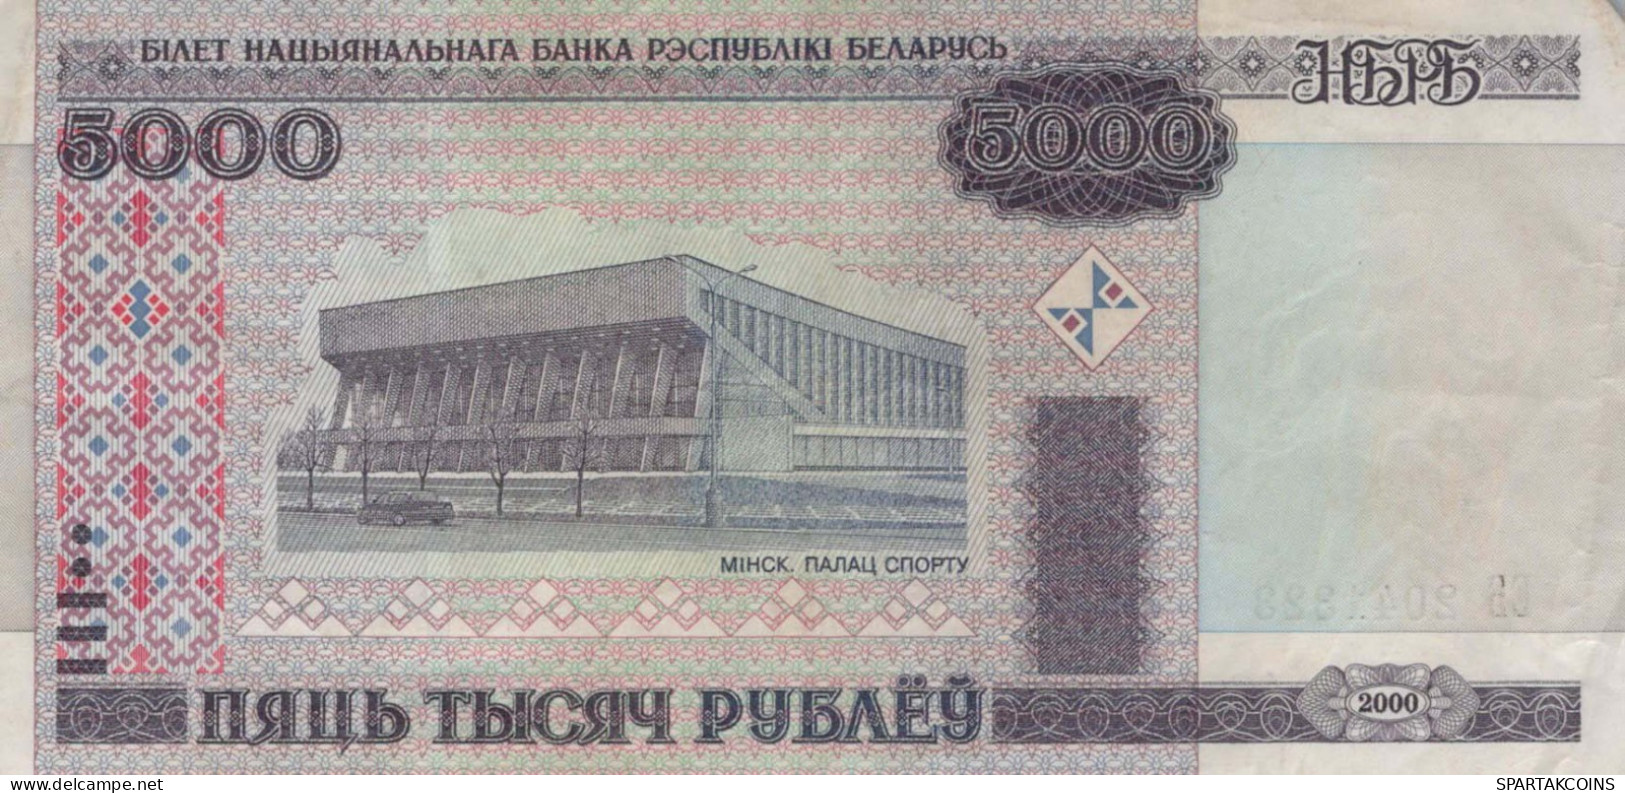 5000 RUBLES 2000 BELARUS Papiergeld Banknote #PK602 - [11] Emisiones Locales